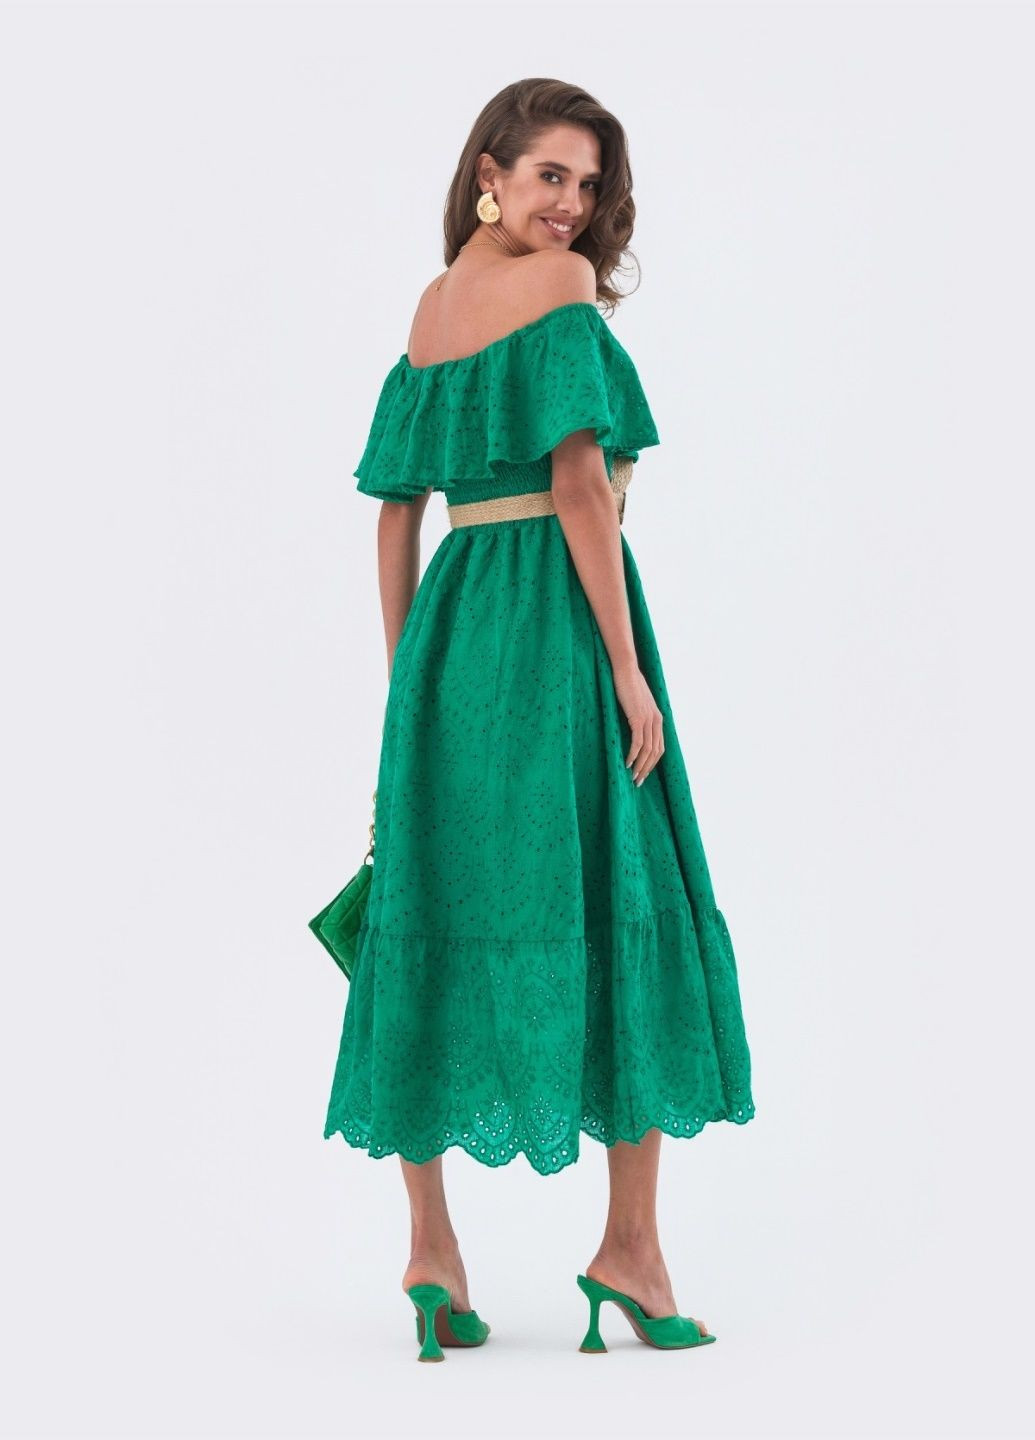 Зелена довга сукня з прошви зелена Dressa